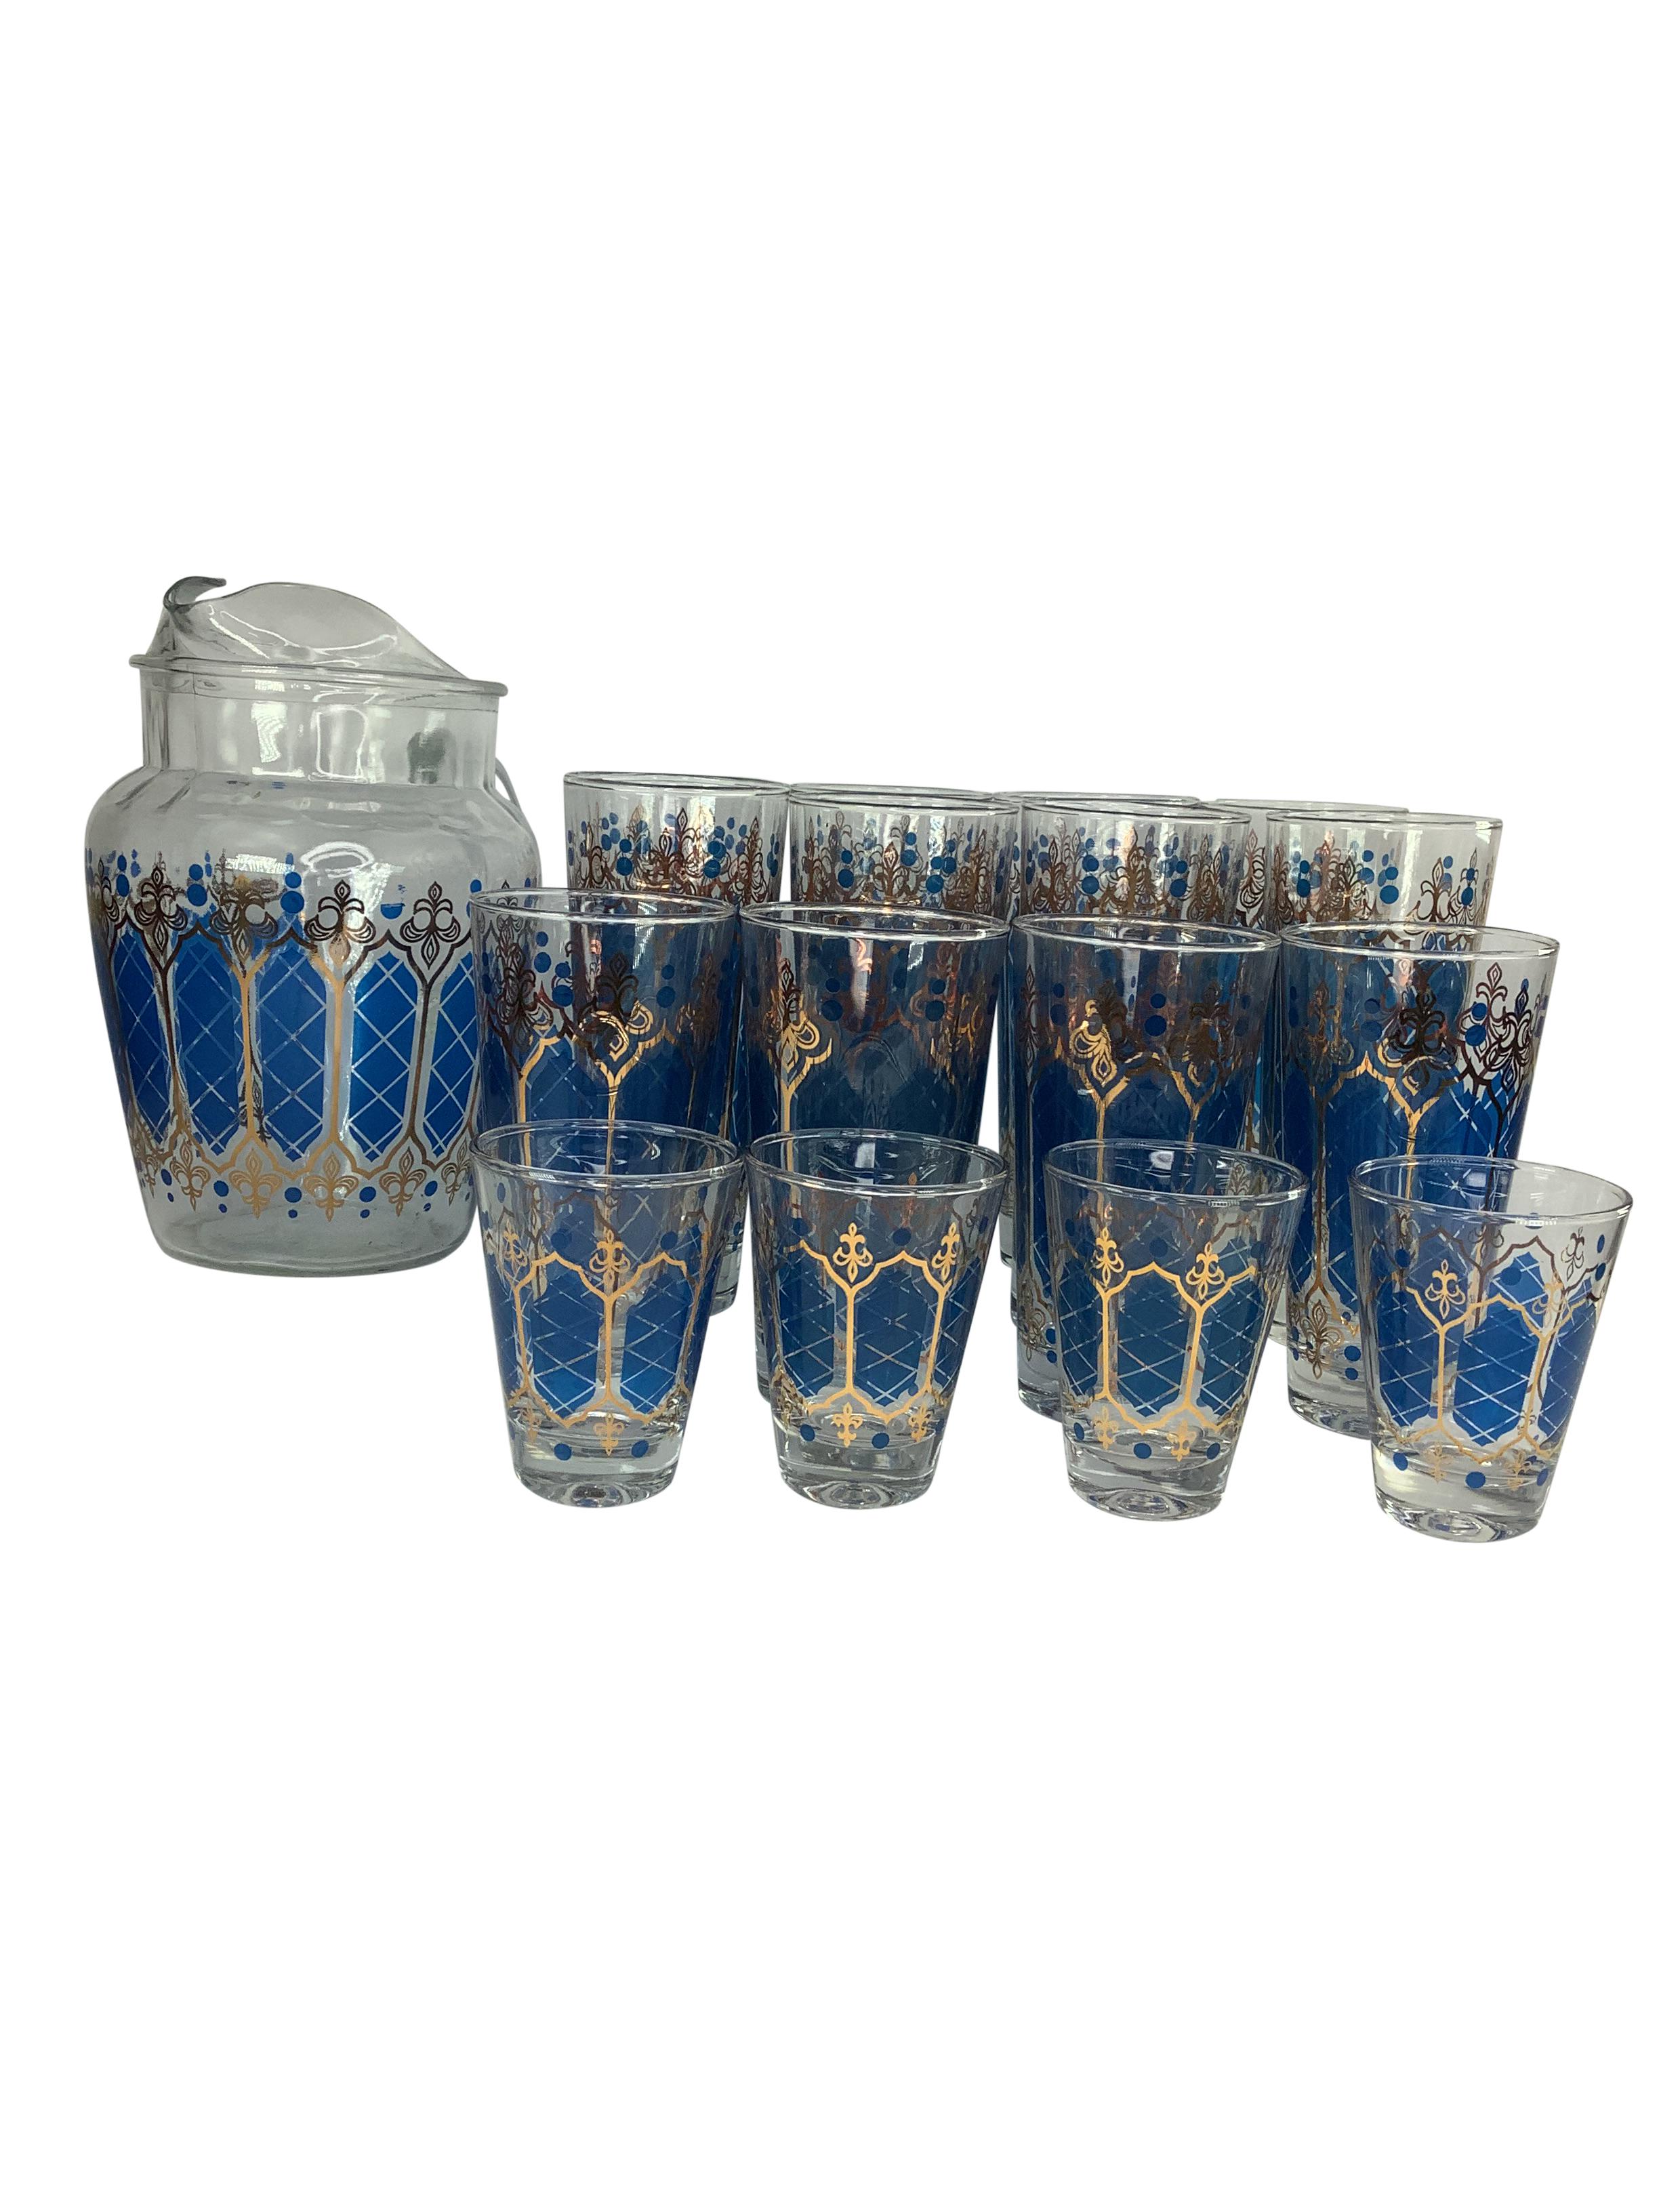 Vintage Blue and Gold Decorated Cocktail Set - Set of 17